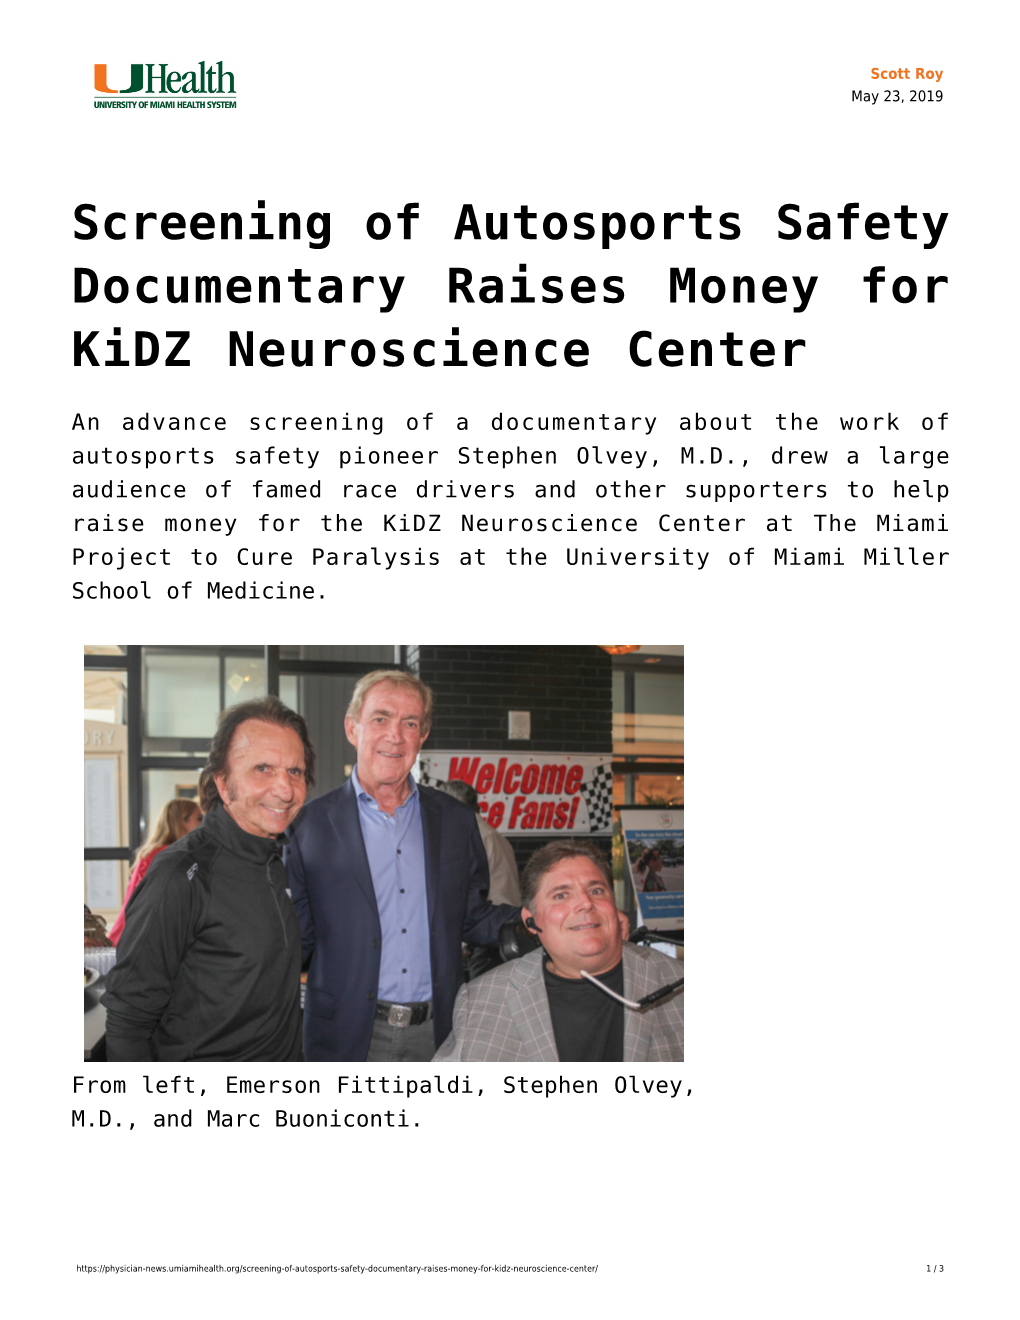 Screening of Autosports Safety Documentary Raises Money for Kidz Neuroscience Center